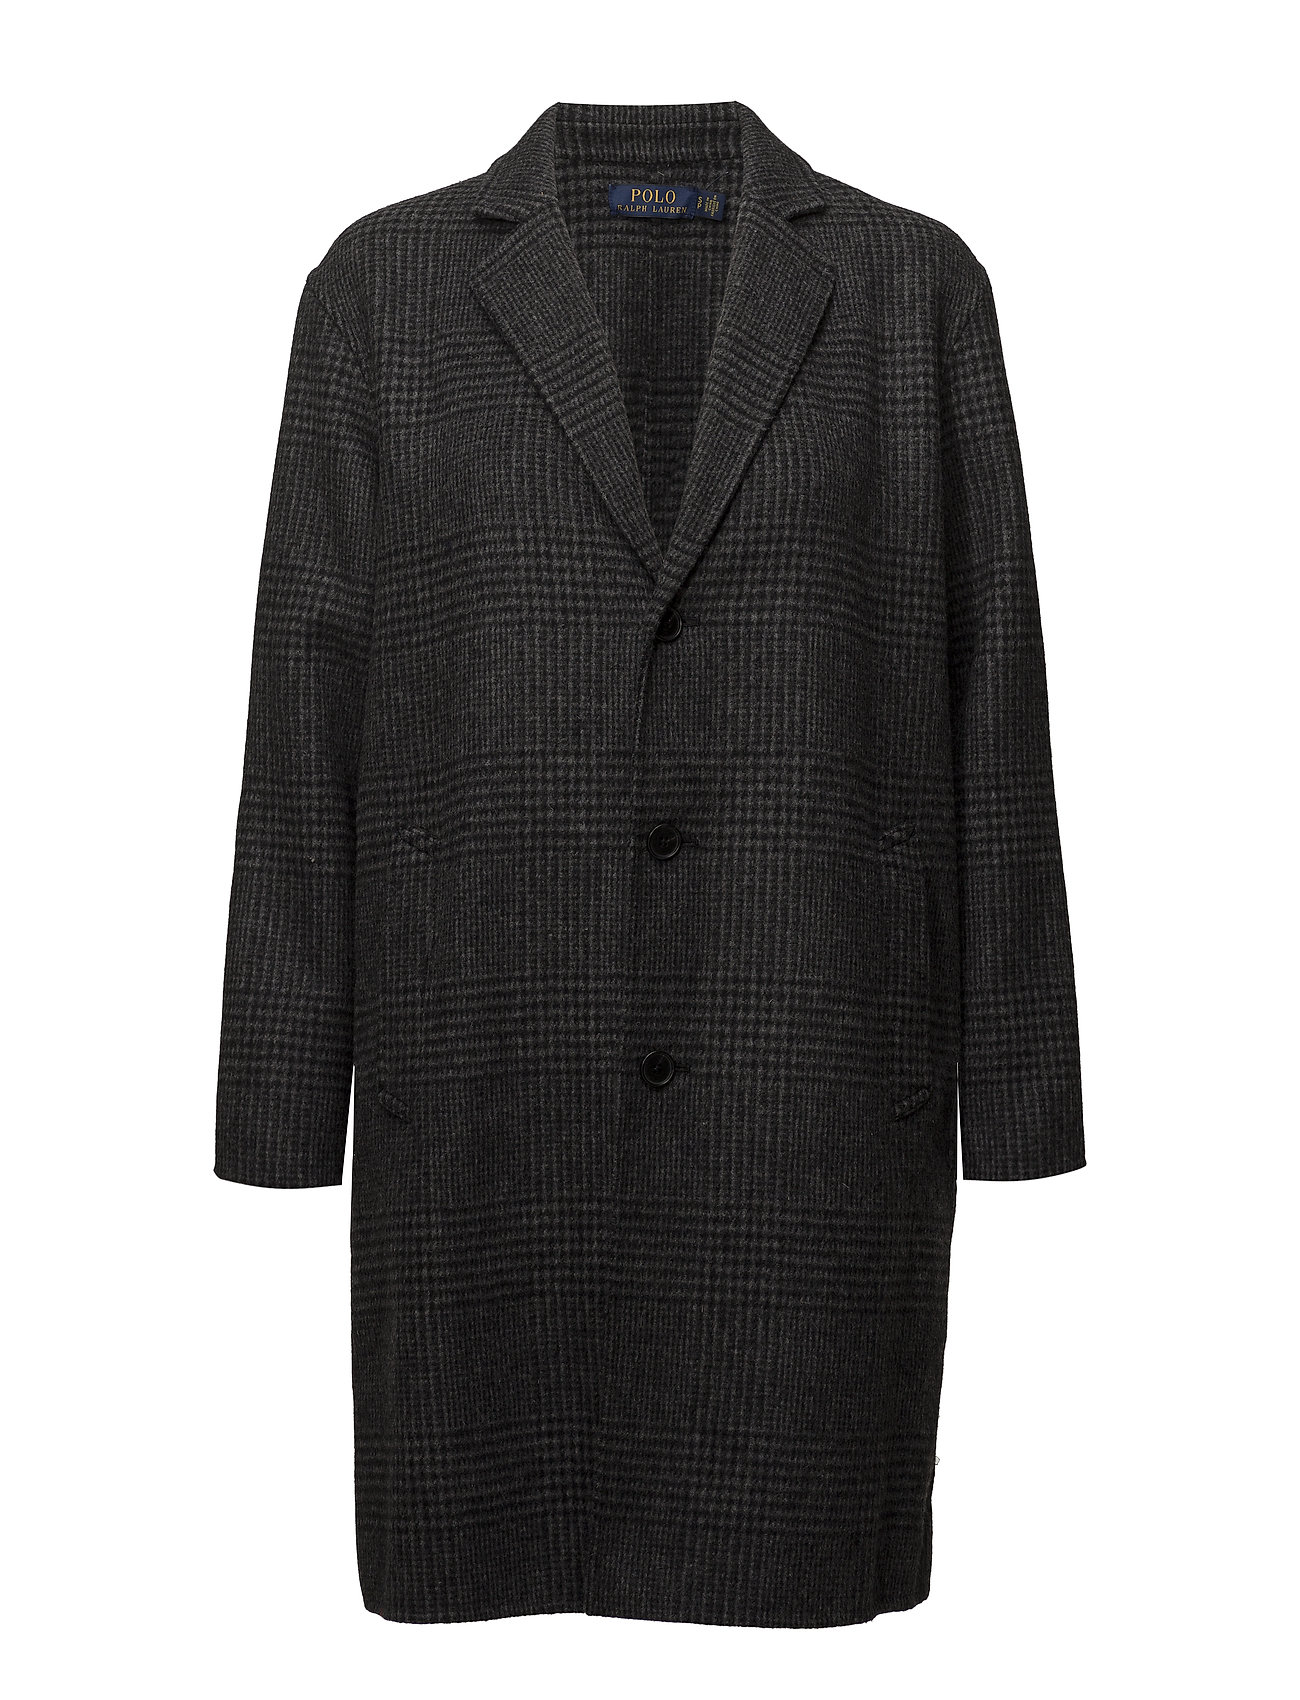 polo ralph lauren wool & cashmere trench coat